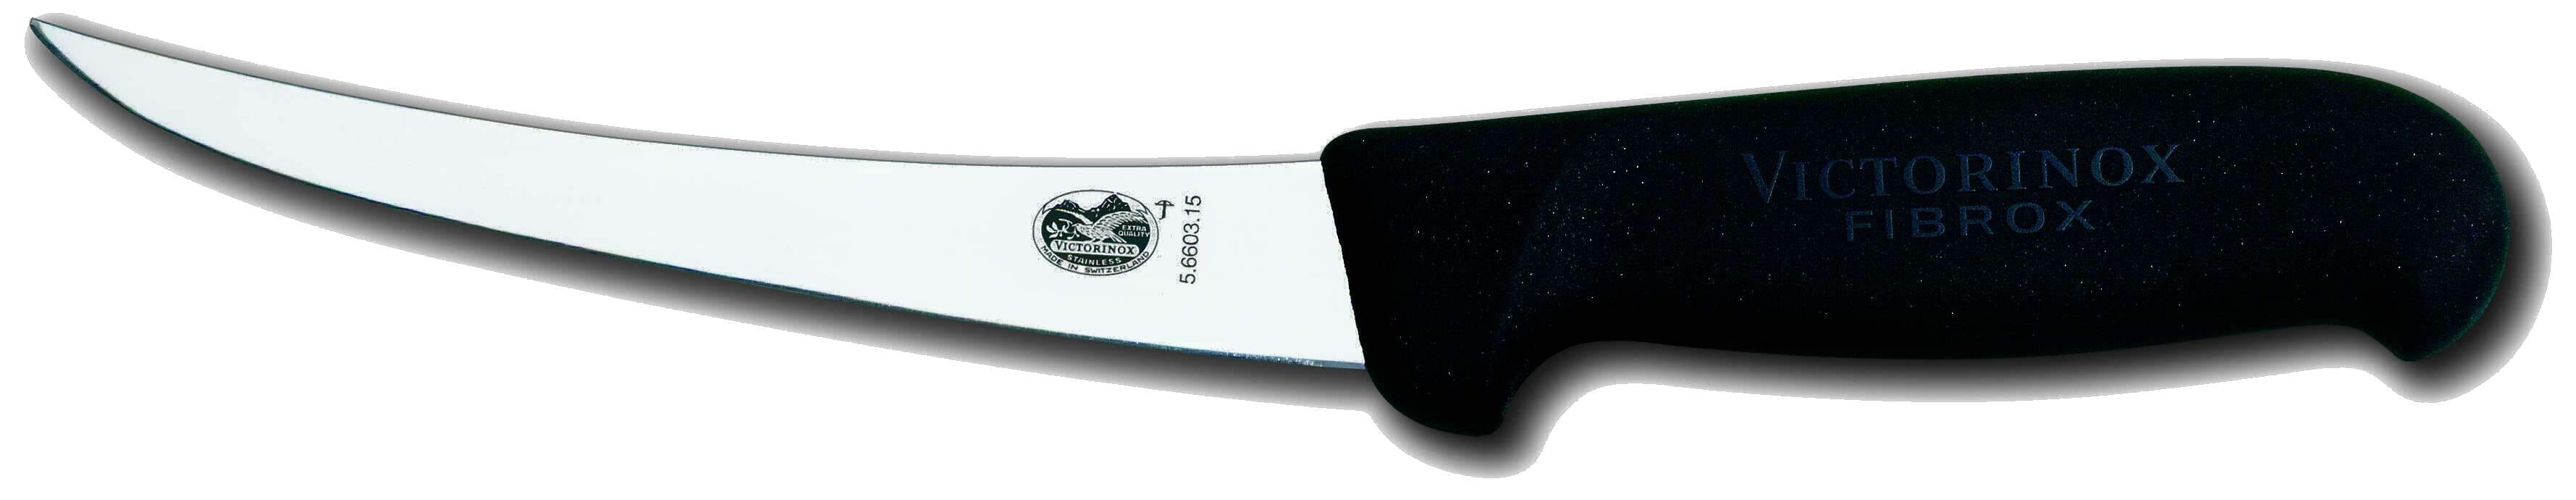 Victorinox Boning Knife 5.6603.15cm Curved Blade Black Handle